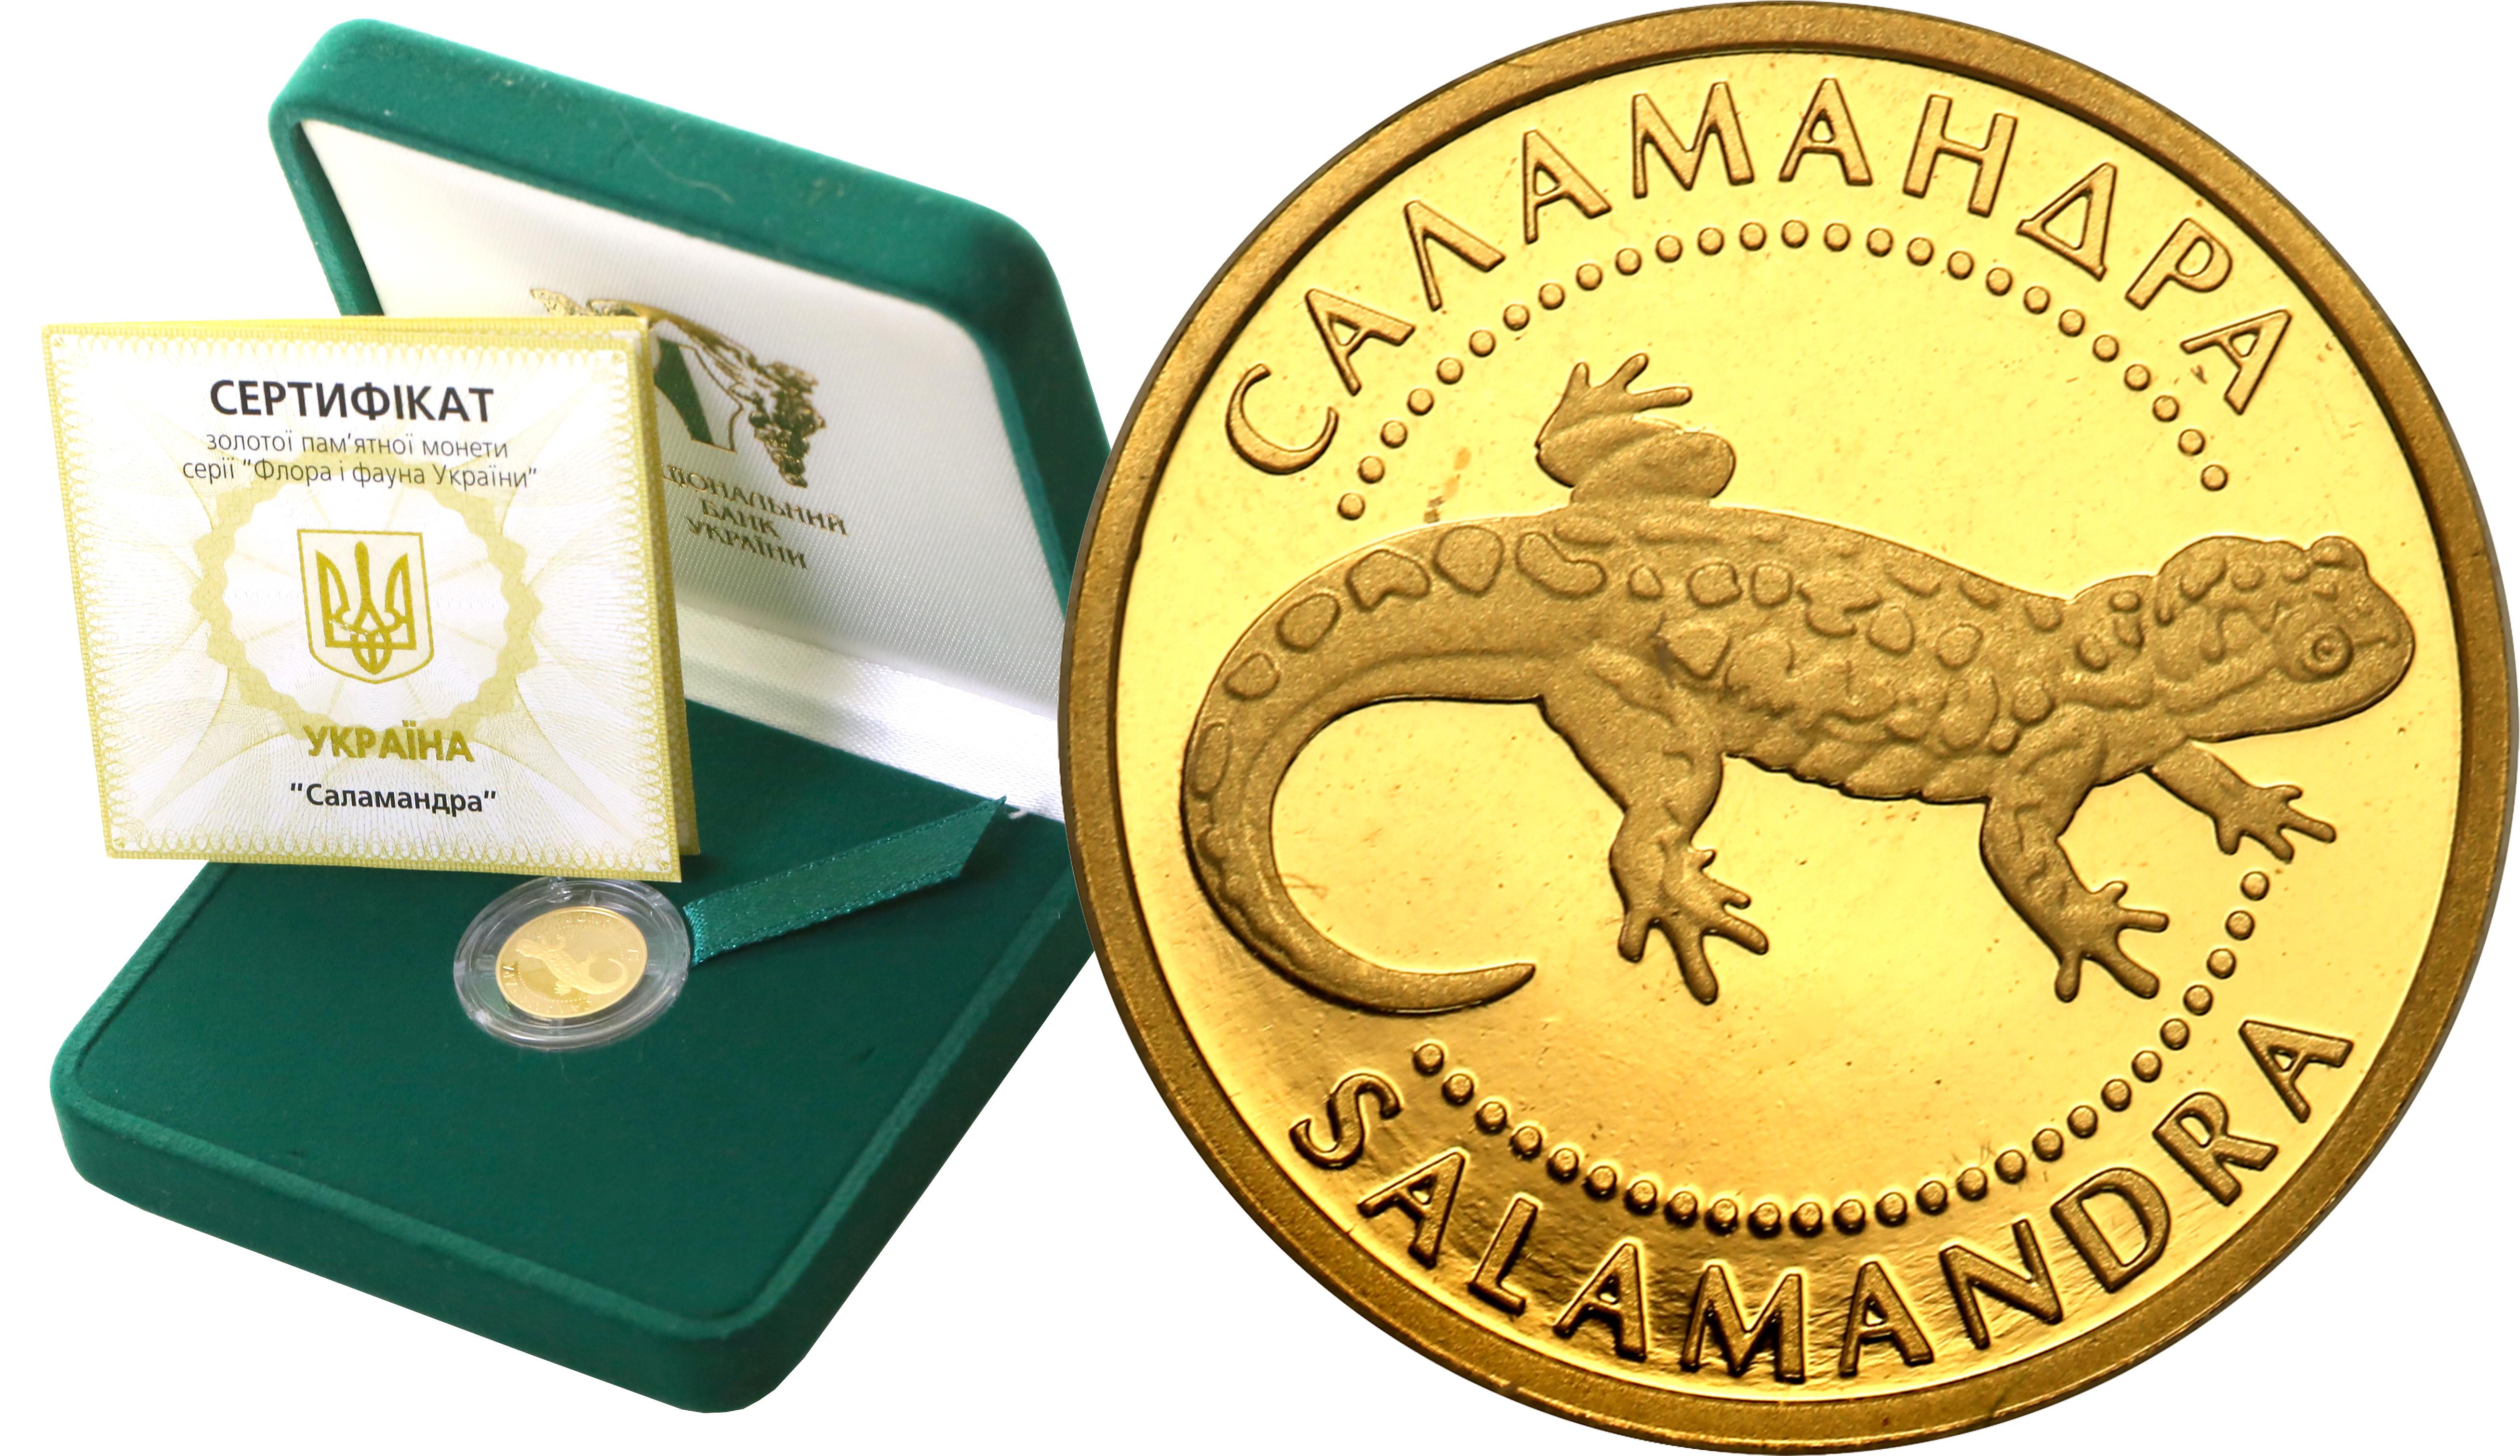 Ukraina 2 hrywny 2003 Salamandra 1/25 uncji czystego złota st. L